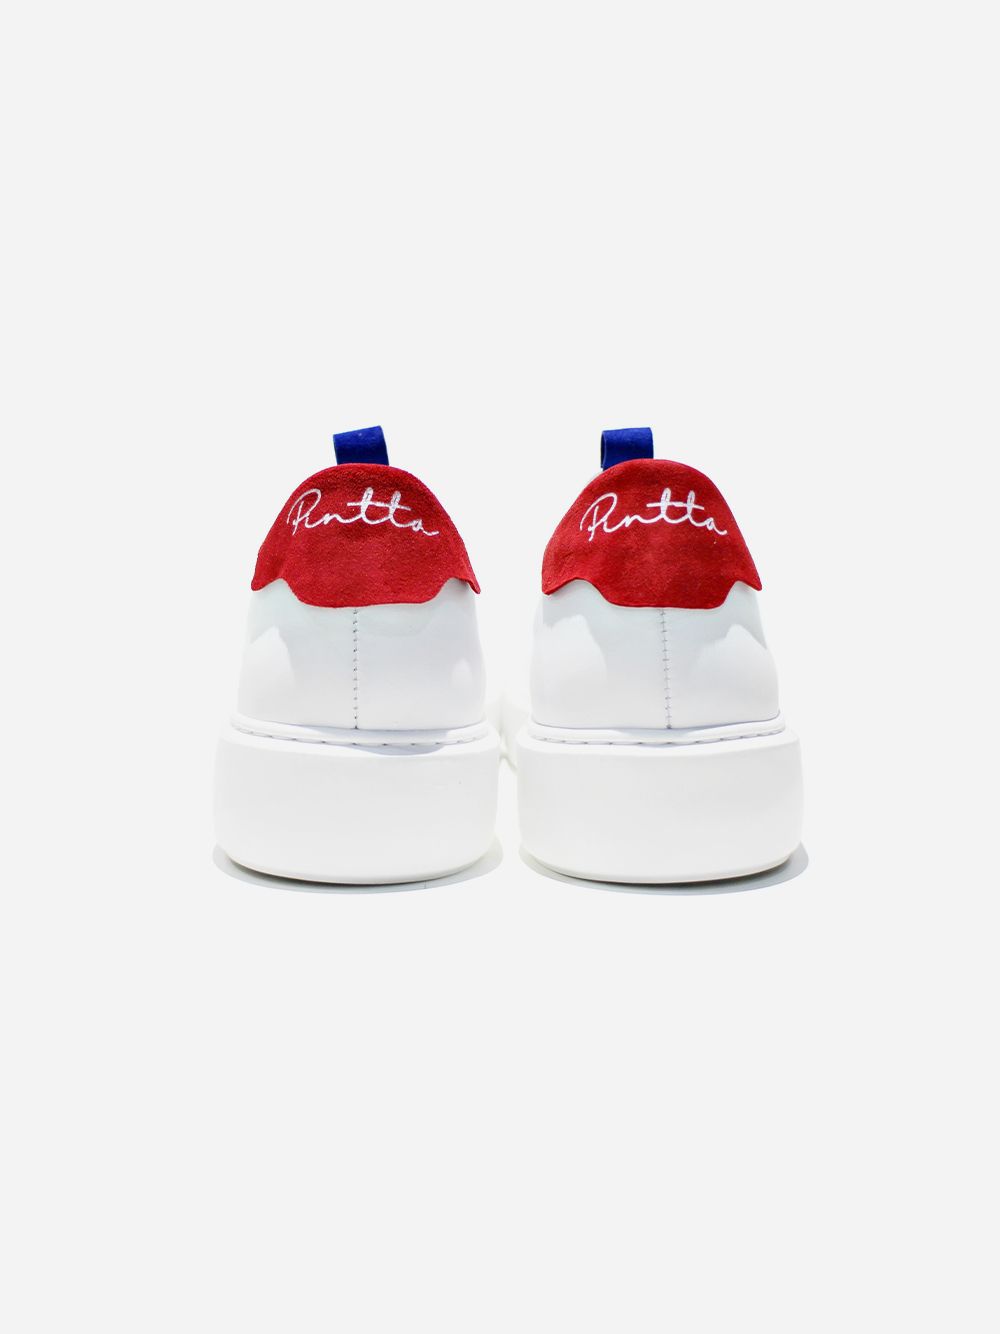 Paris Red Sneakers 